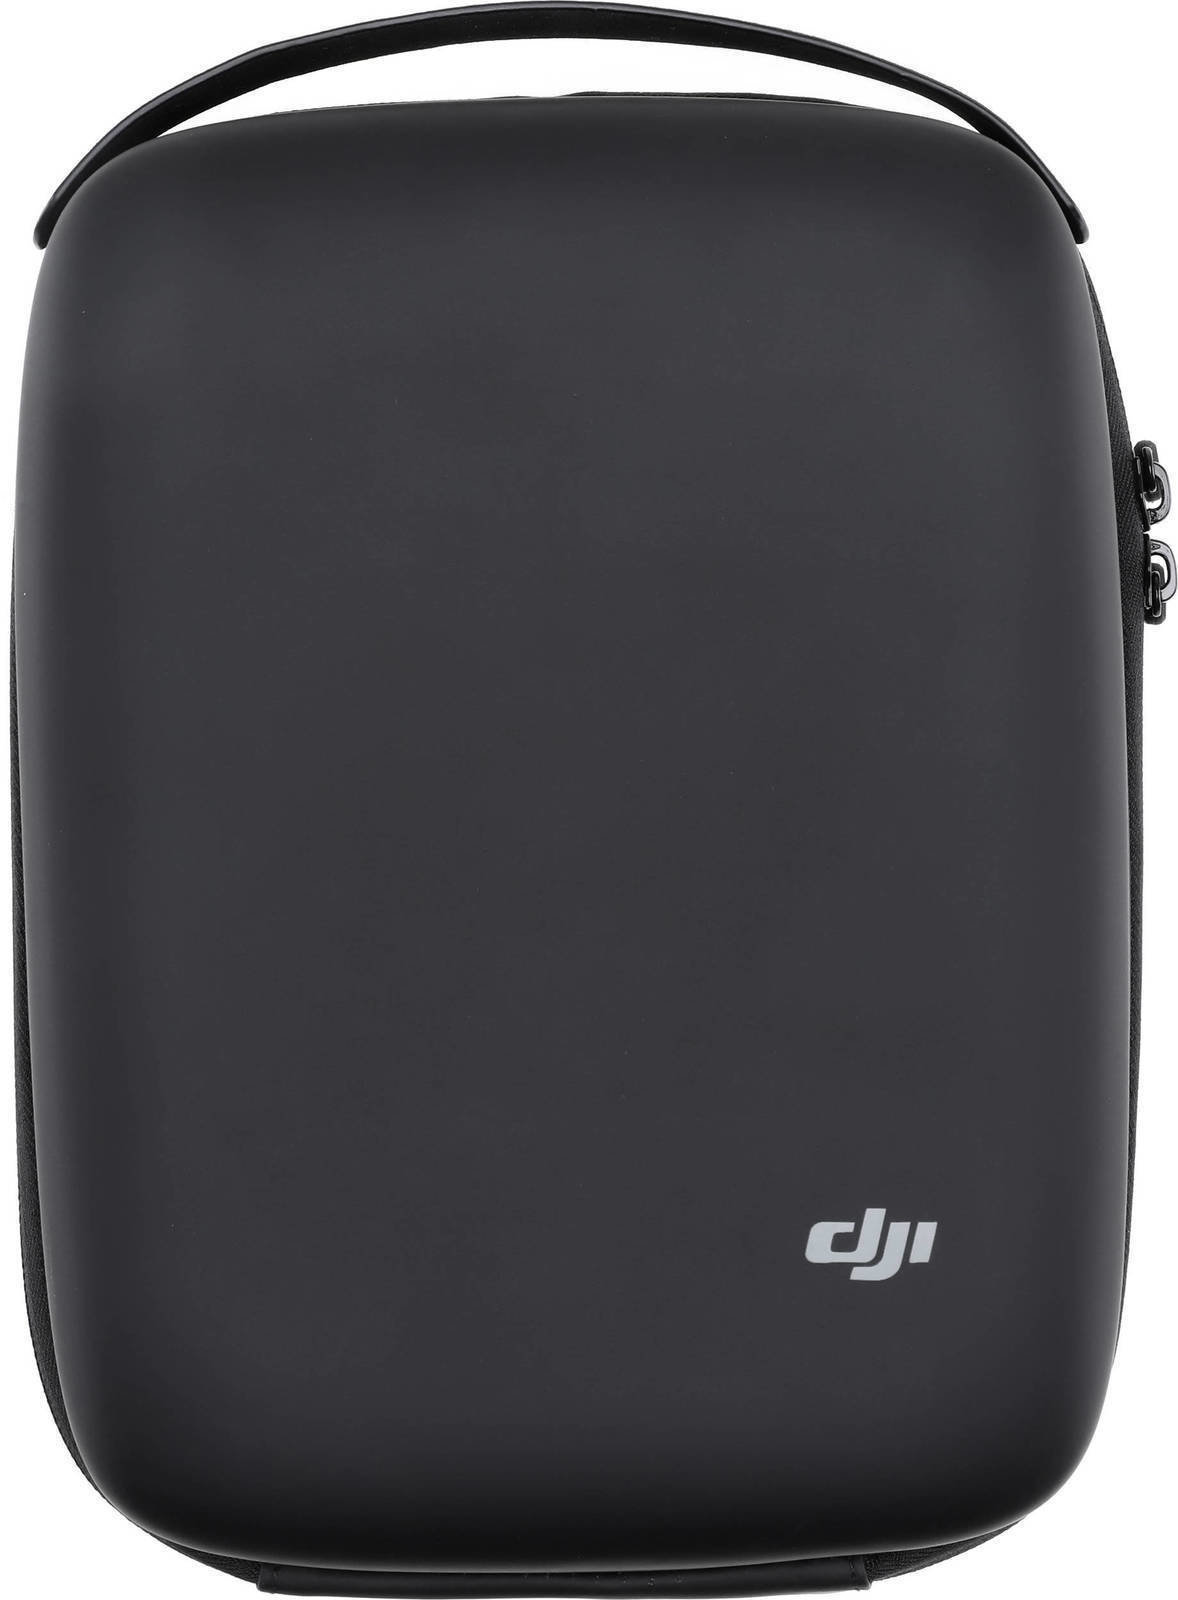 Adaptateur pour drones DJI Spark - Portable Charging Station Carrying Bag - DJIS0200-09